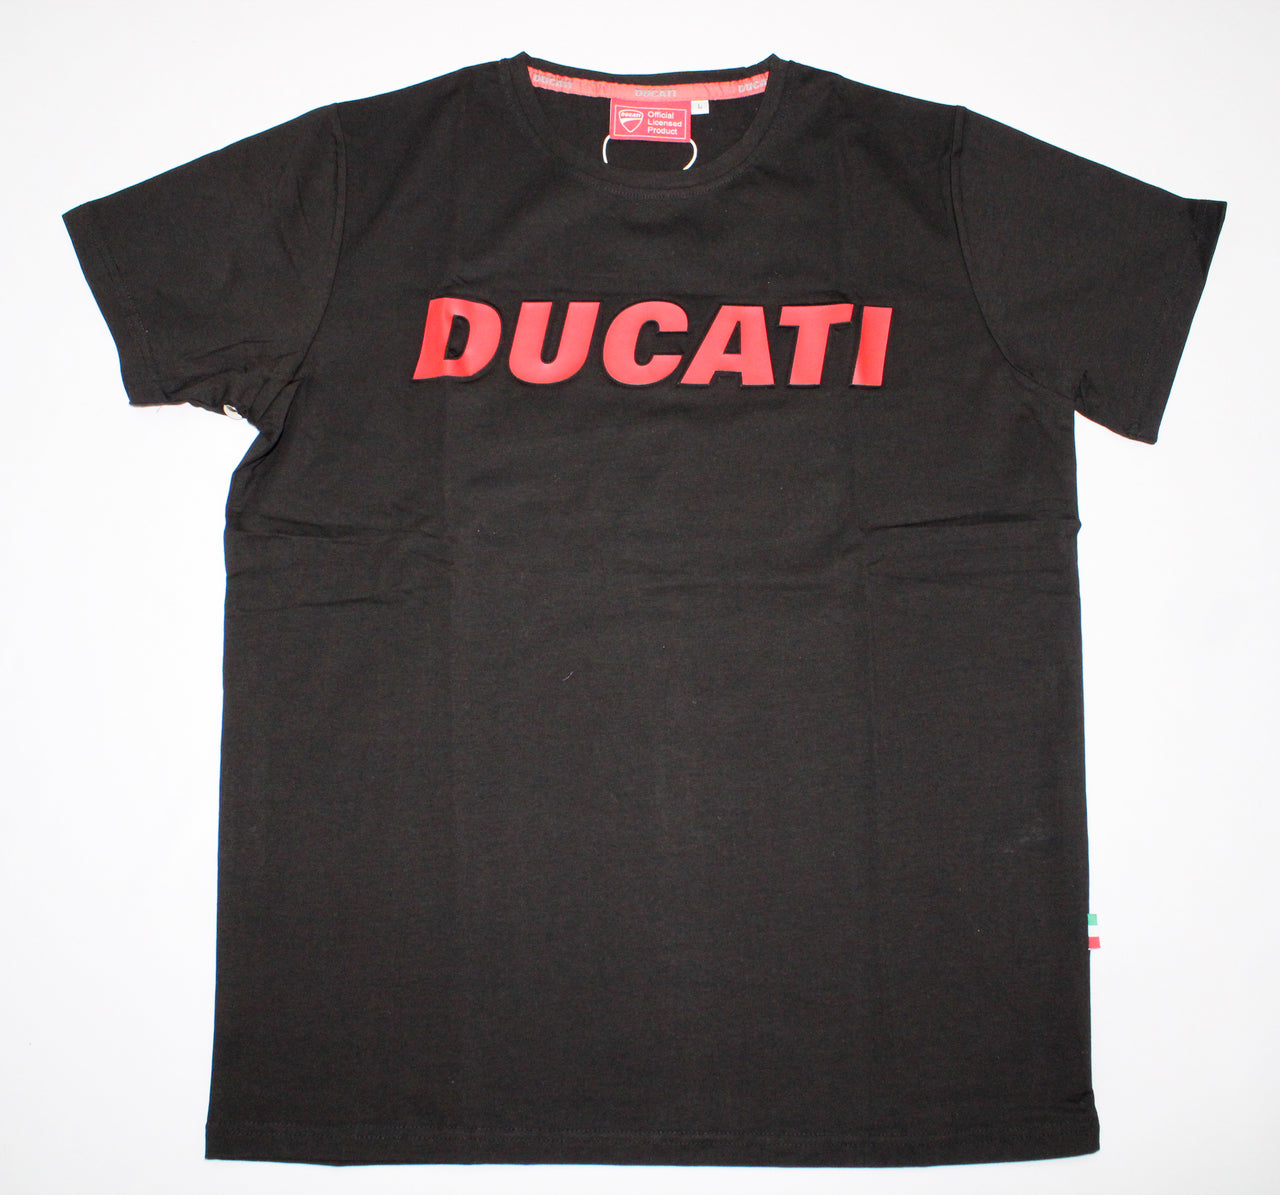 Ducati Black T-Shirt Red Wordmark